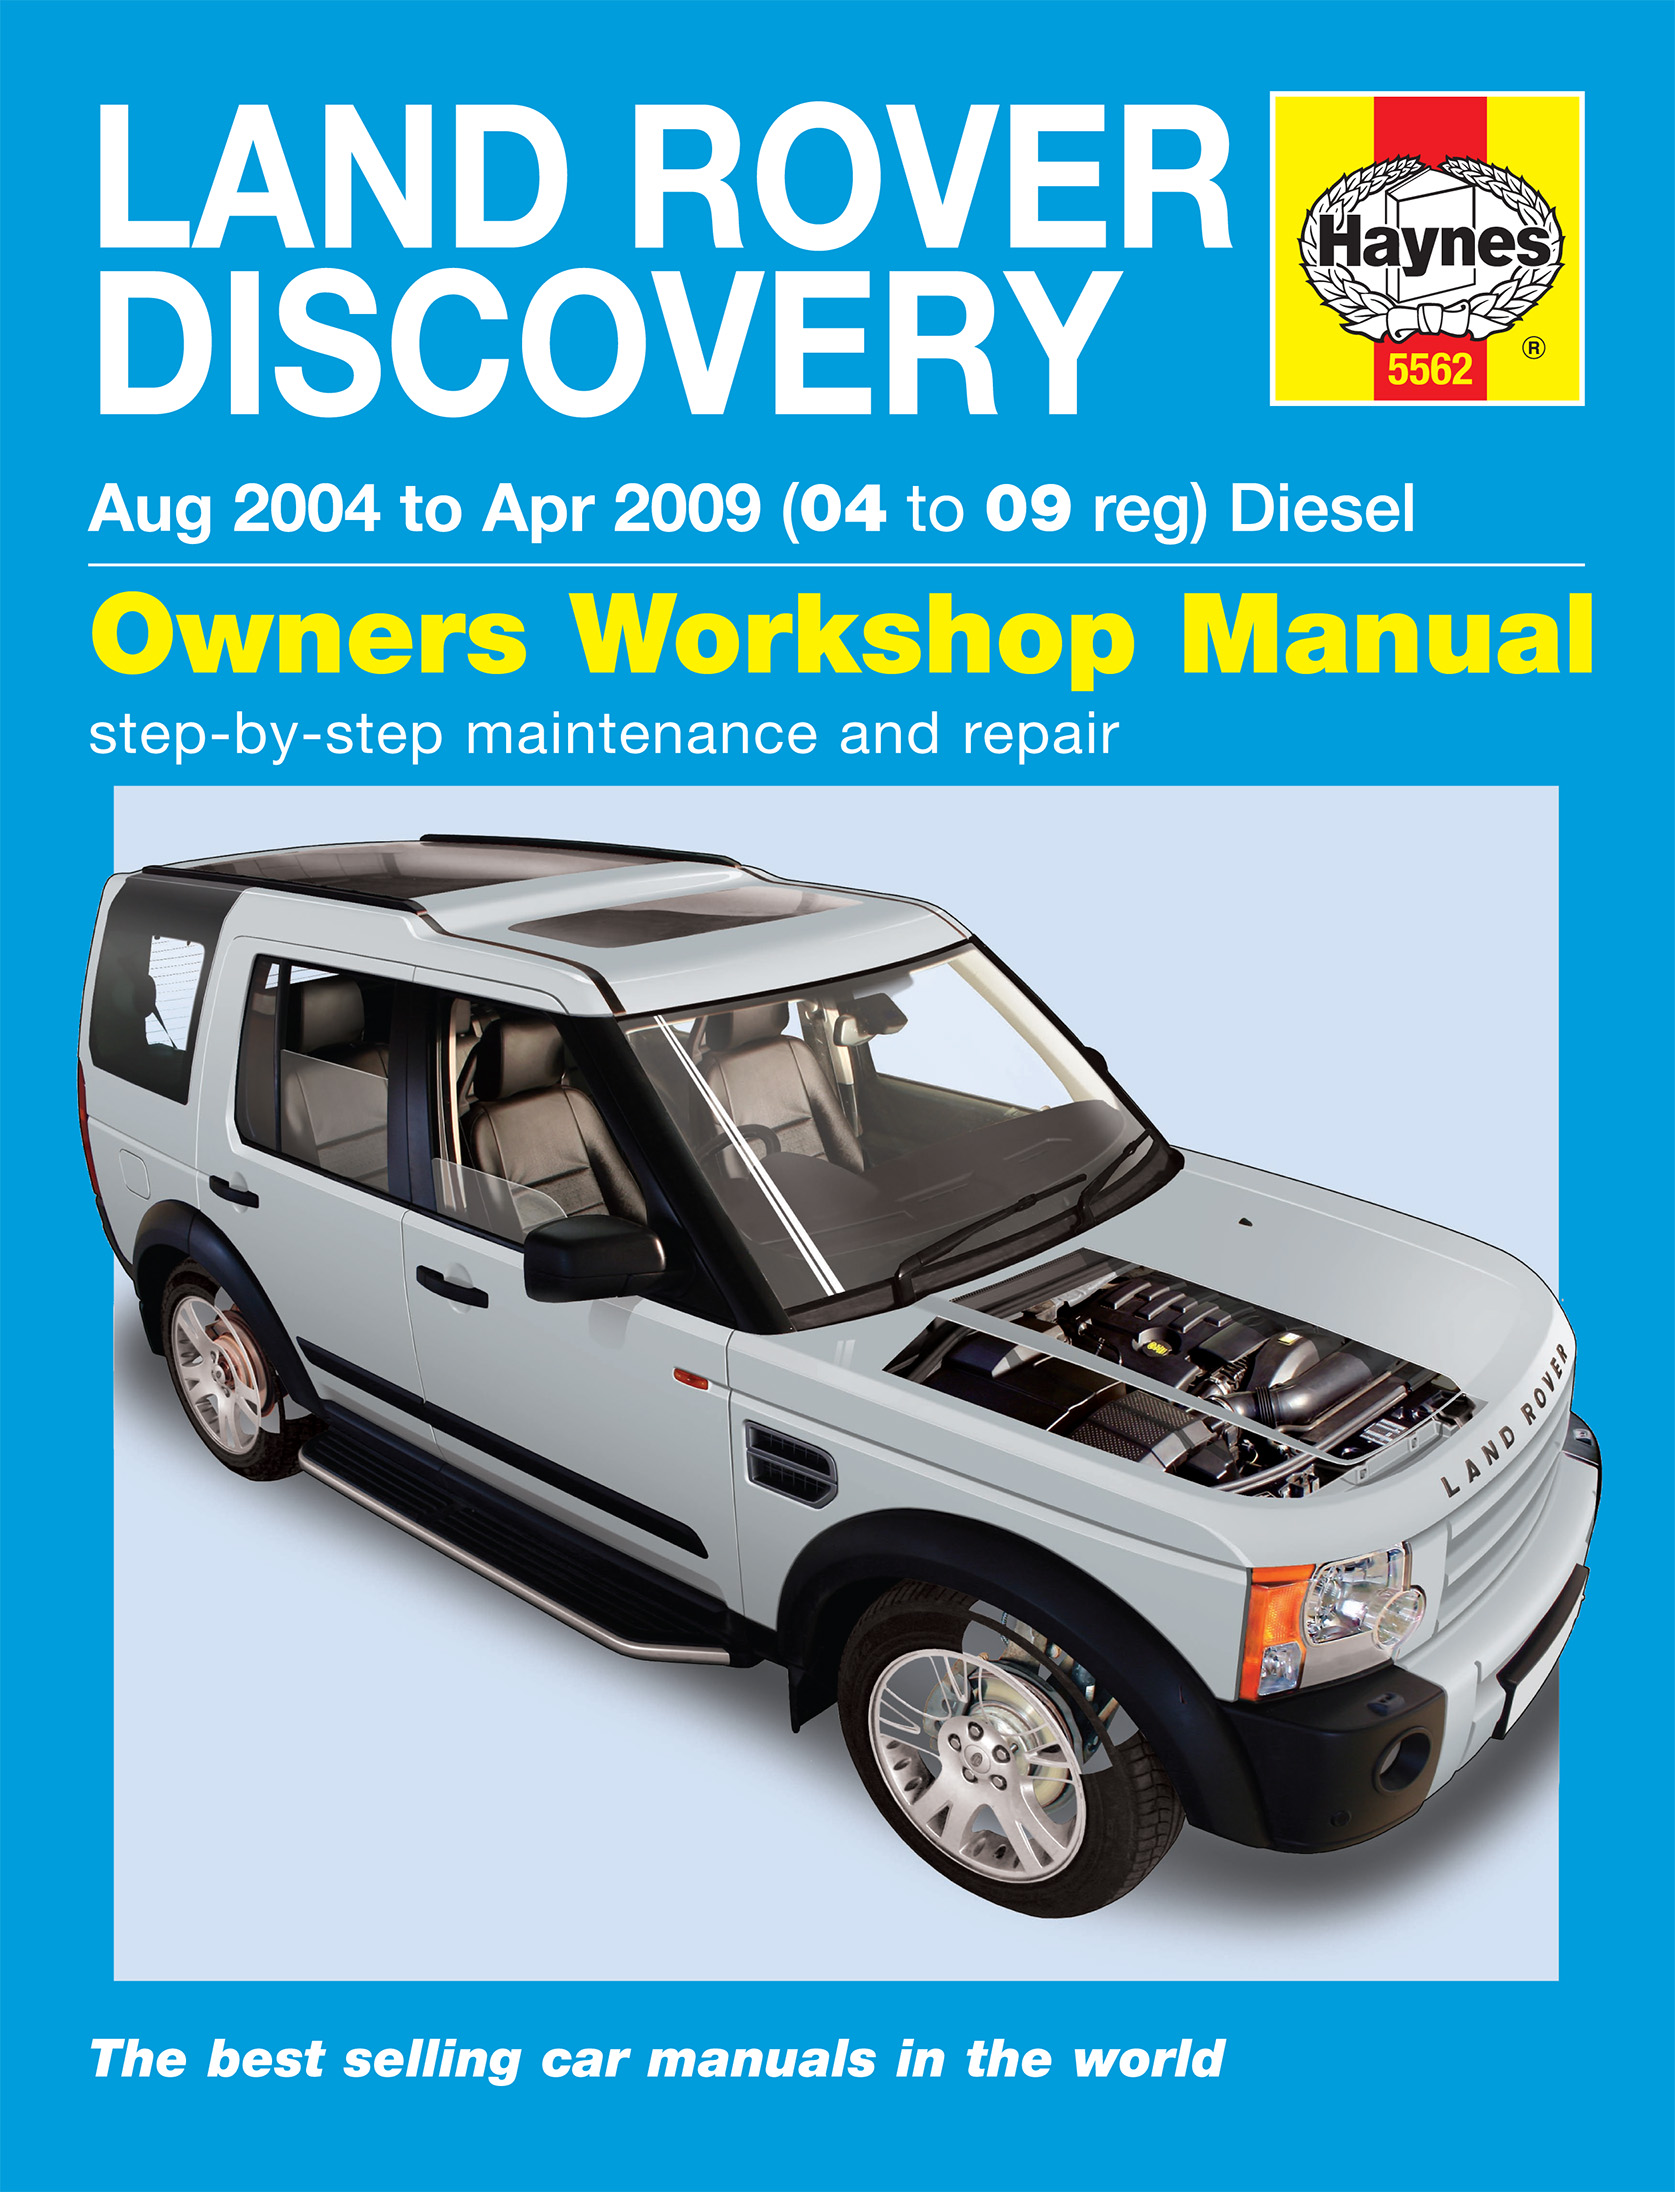 Дизель дискавери 1. Ленд Ровер Дискавери дизель. Land Rover Discovery 2 2004 мануал. Книга Land Rover Discovery 2 1998-2004 дизель, Алфамер. Инструкция Land Rover Discovery 3.